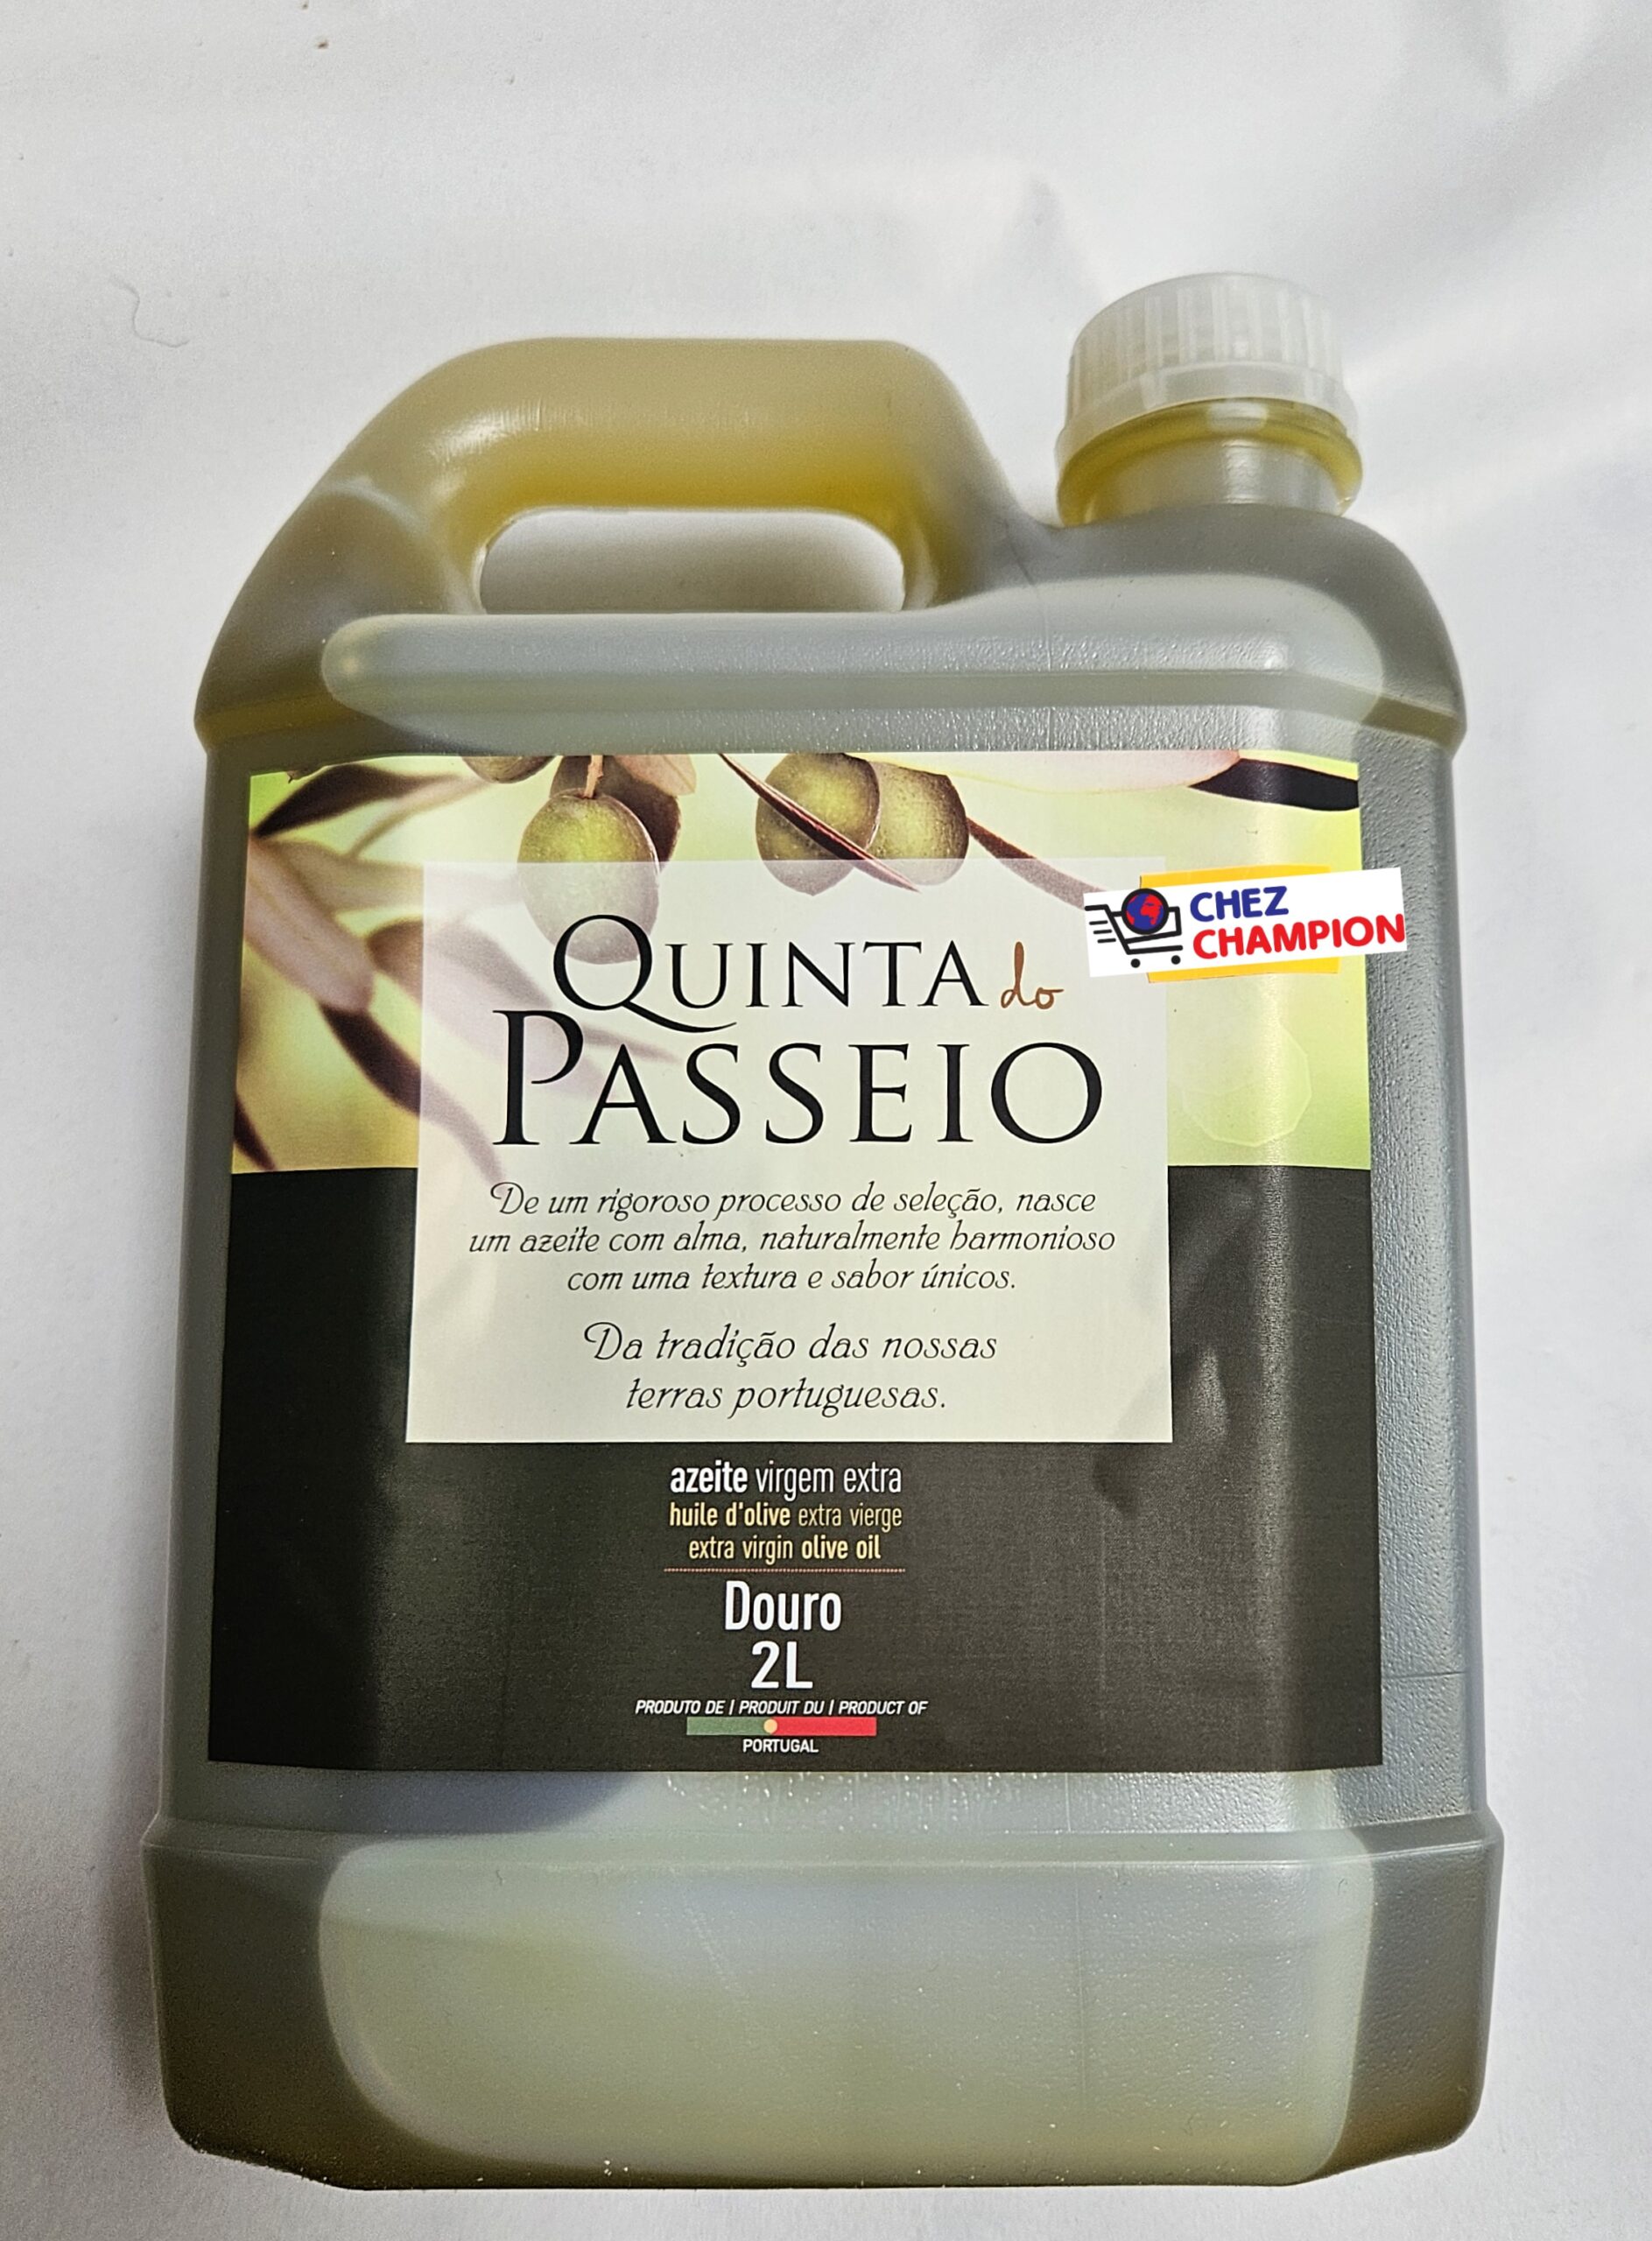 Quinta do passeio azeite virgem extra douro – huile d’olive extra vierge – 2l